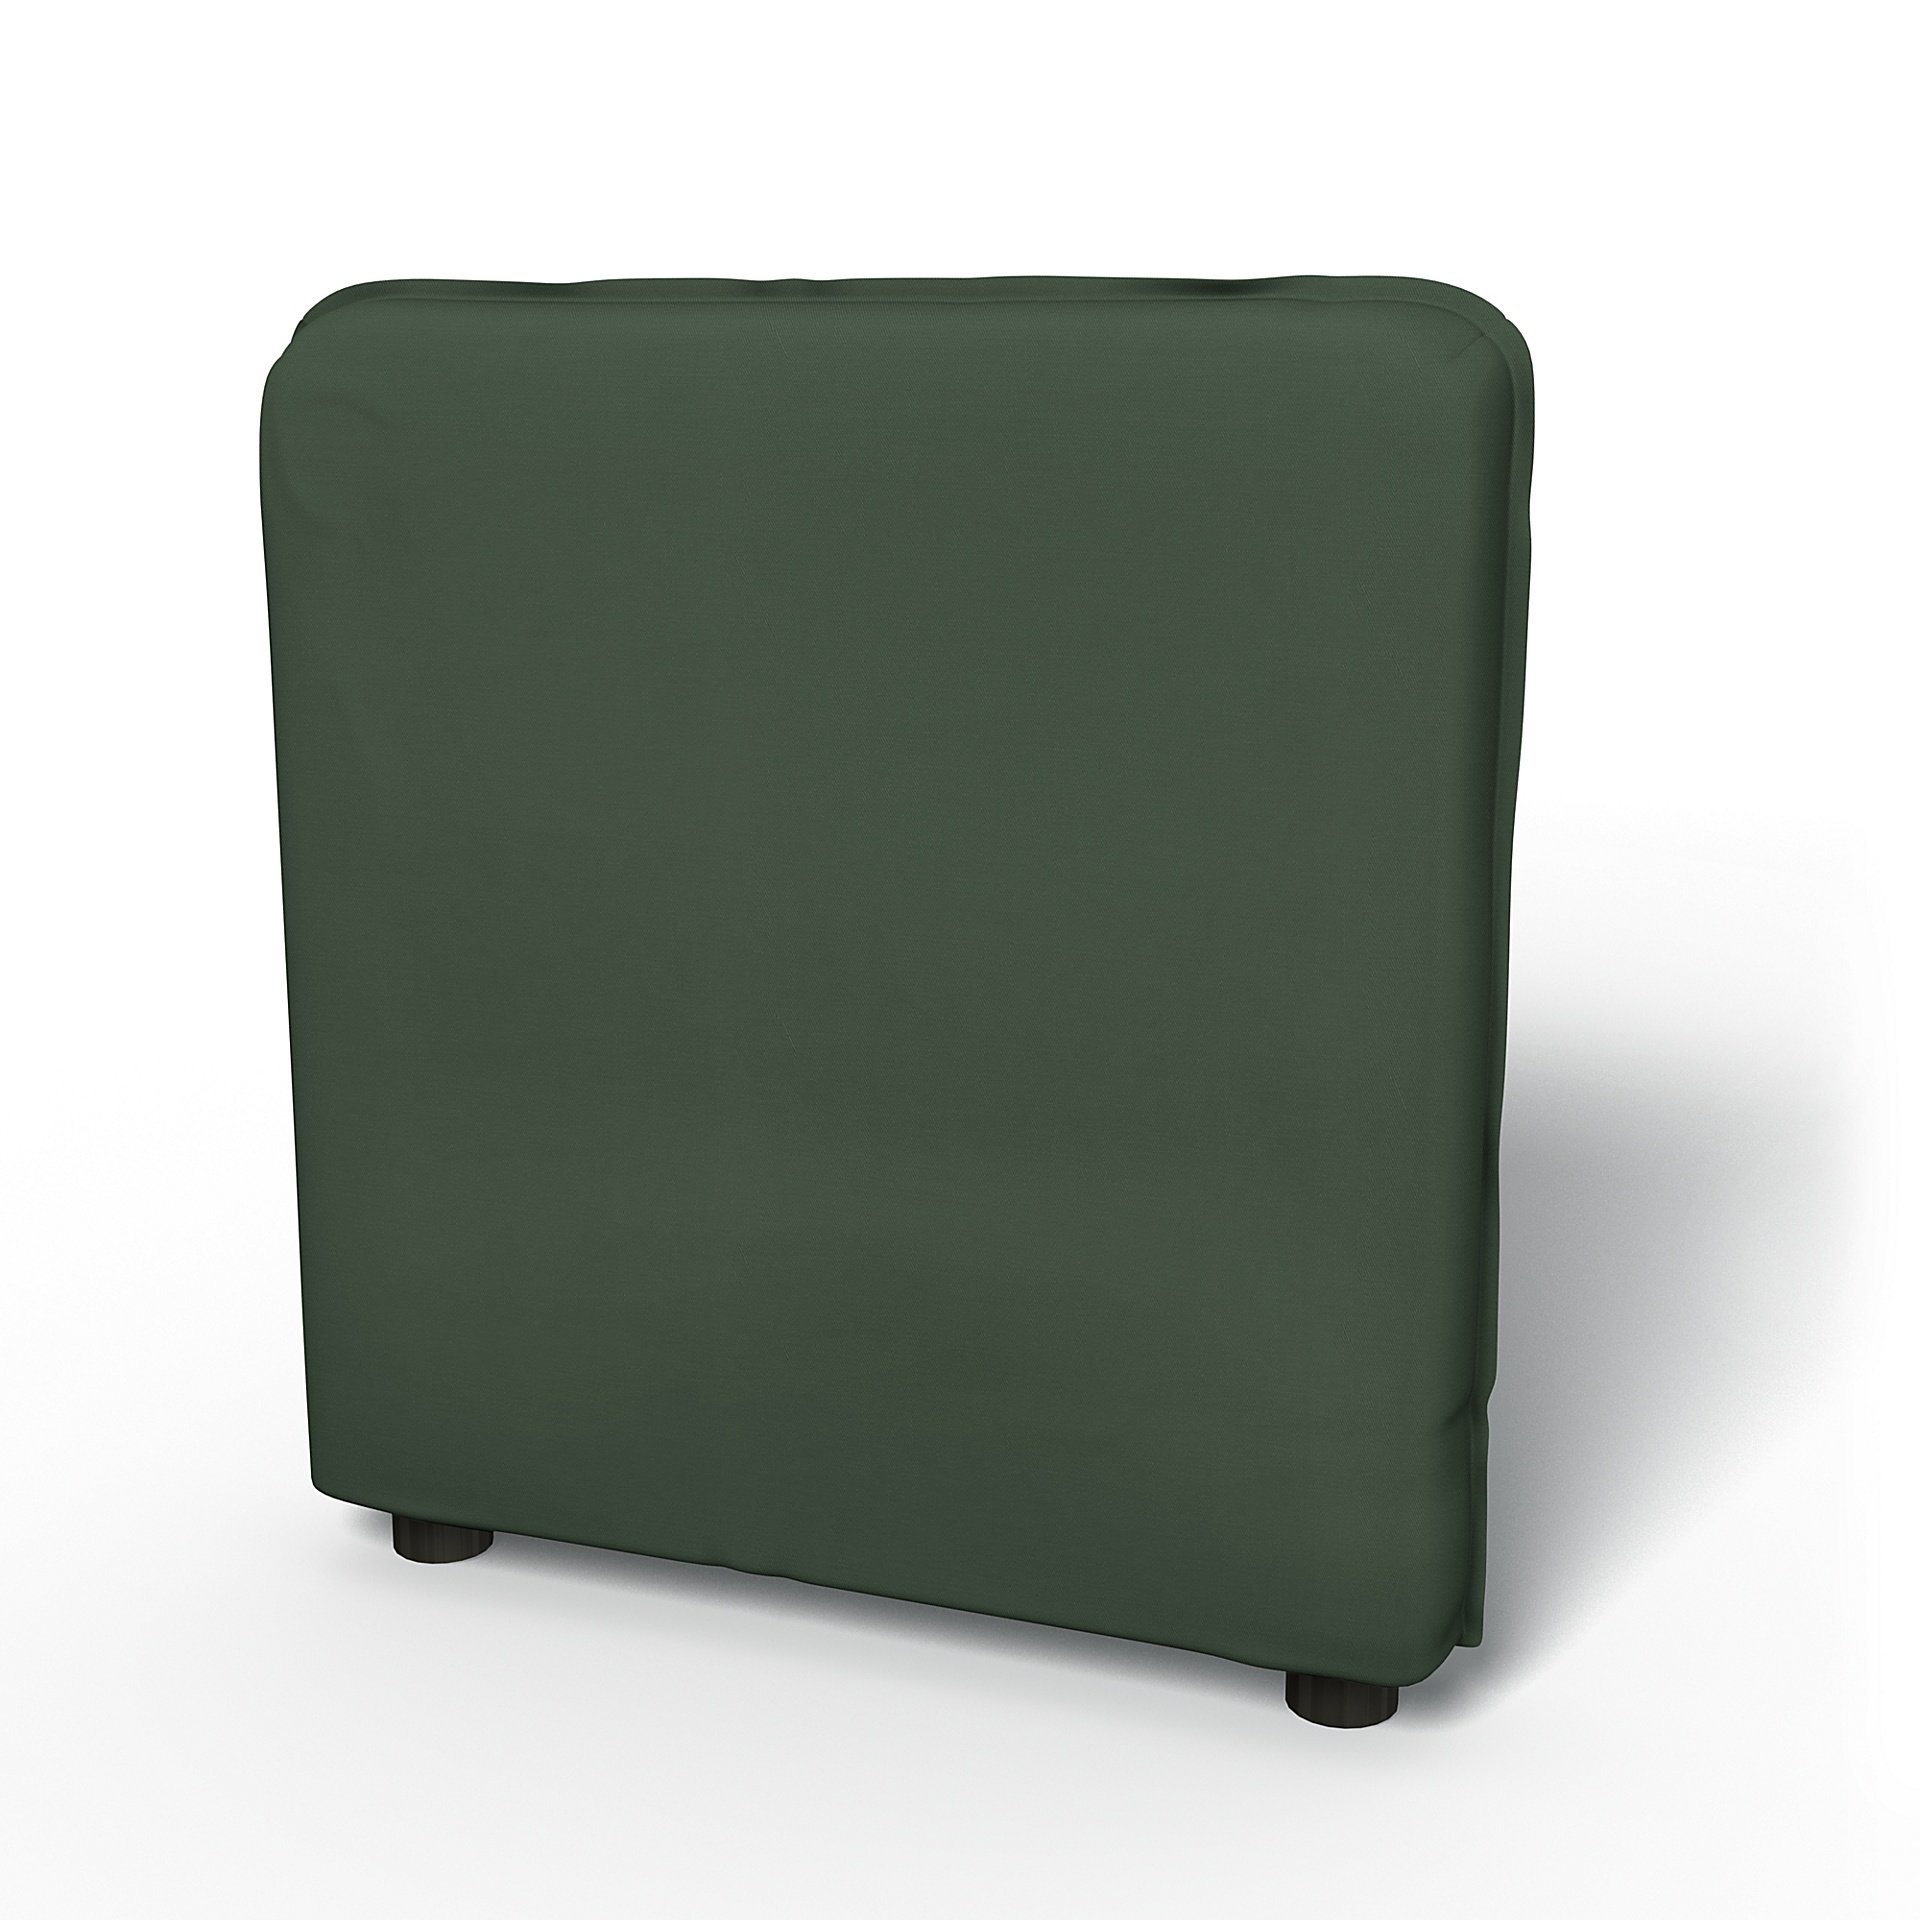 IKEA - Vallentuna Armrest Cover (80x60x13cm), Thyme, Cotton - Bemz